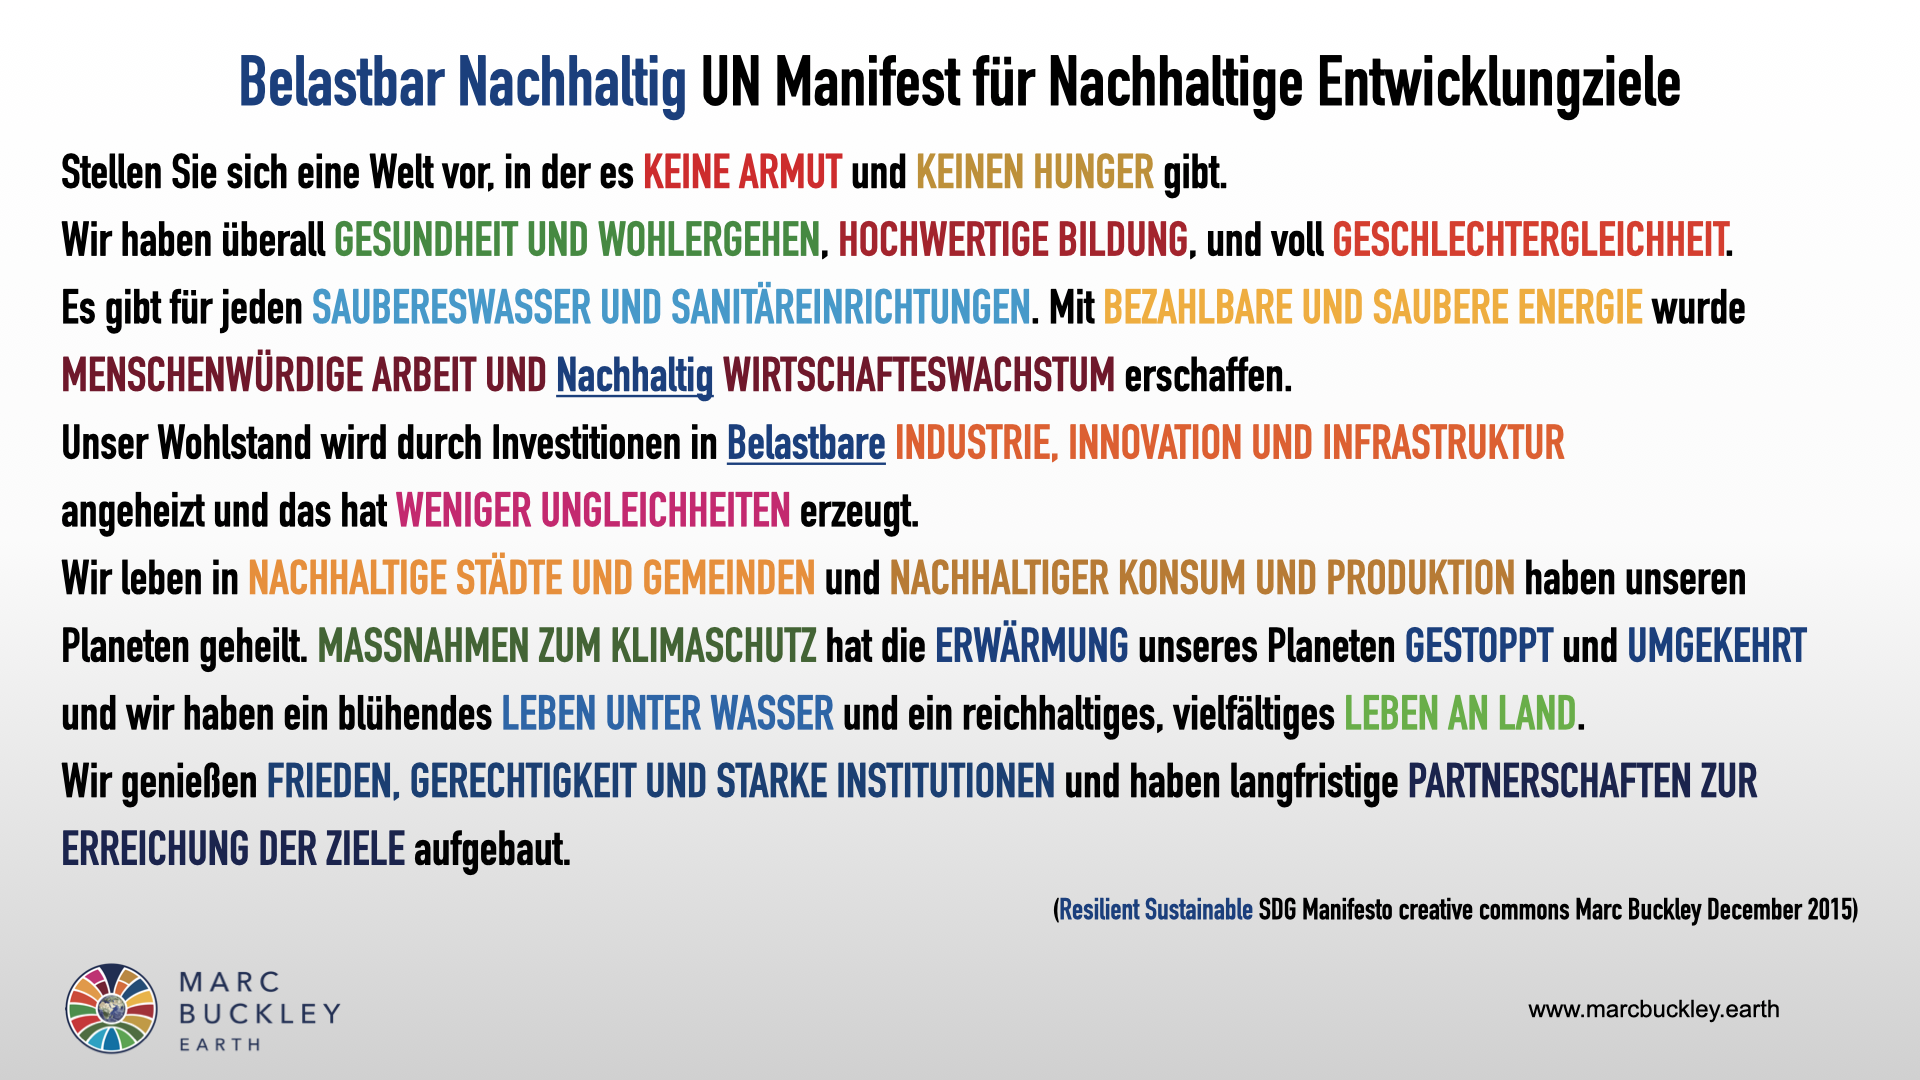 German SDG Manifesto White